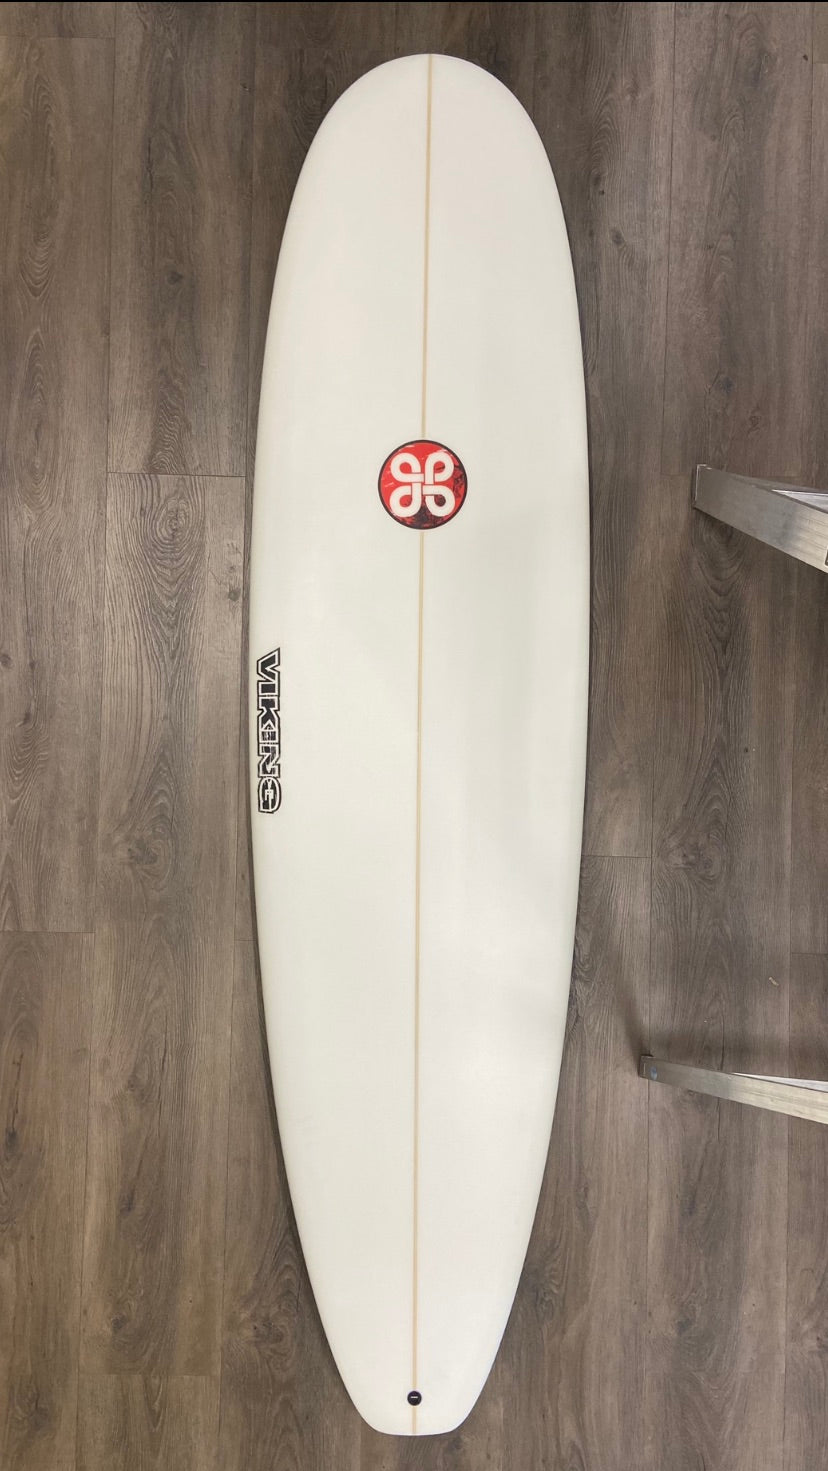 Viking Surfboards 7'4" Funshape Squash Tail Epoxy Surfboard 2 + 1 Surfboard